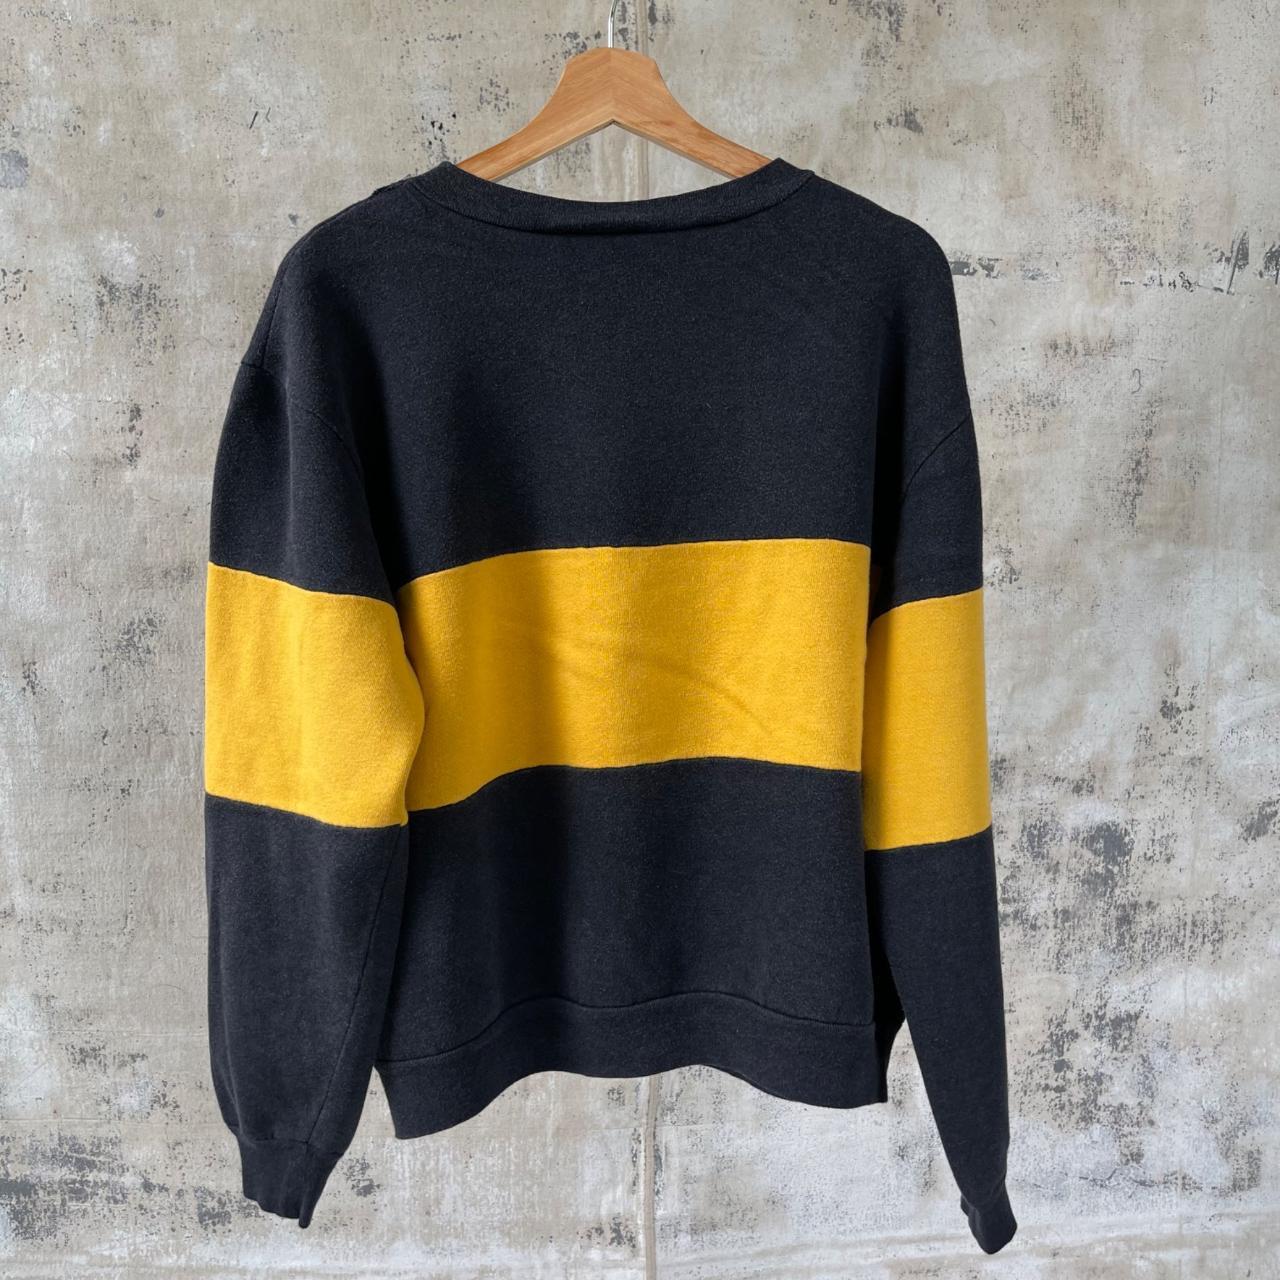 Nutmeg Men's Black and Yellow Sweatshirt | Depop